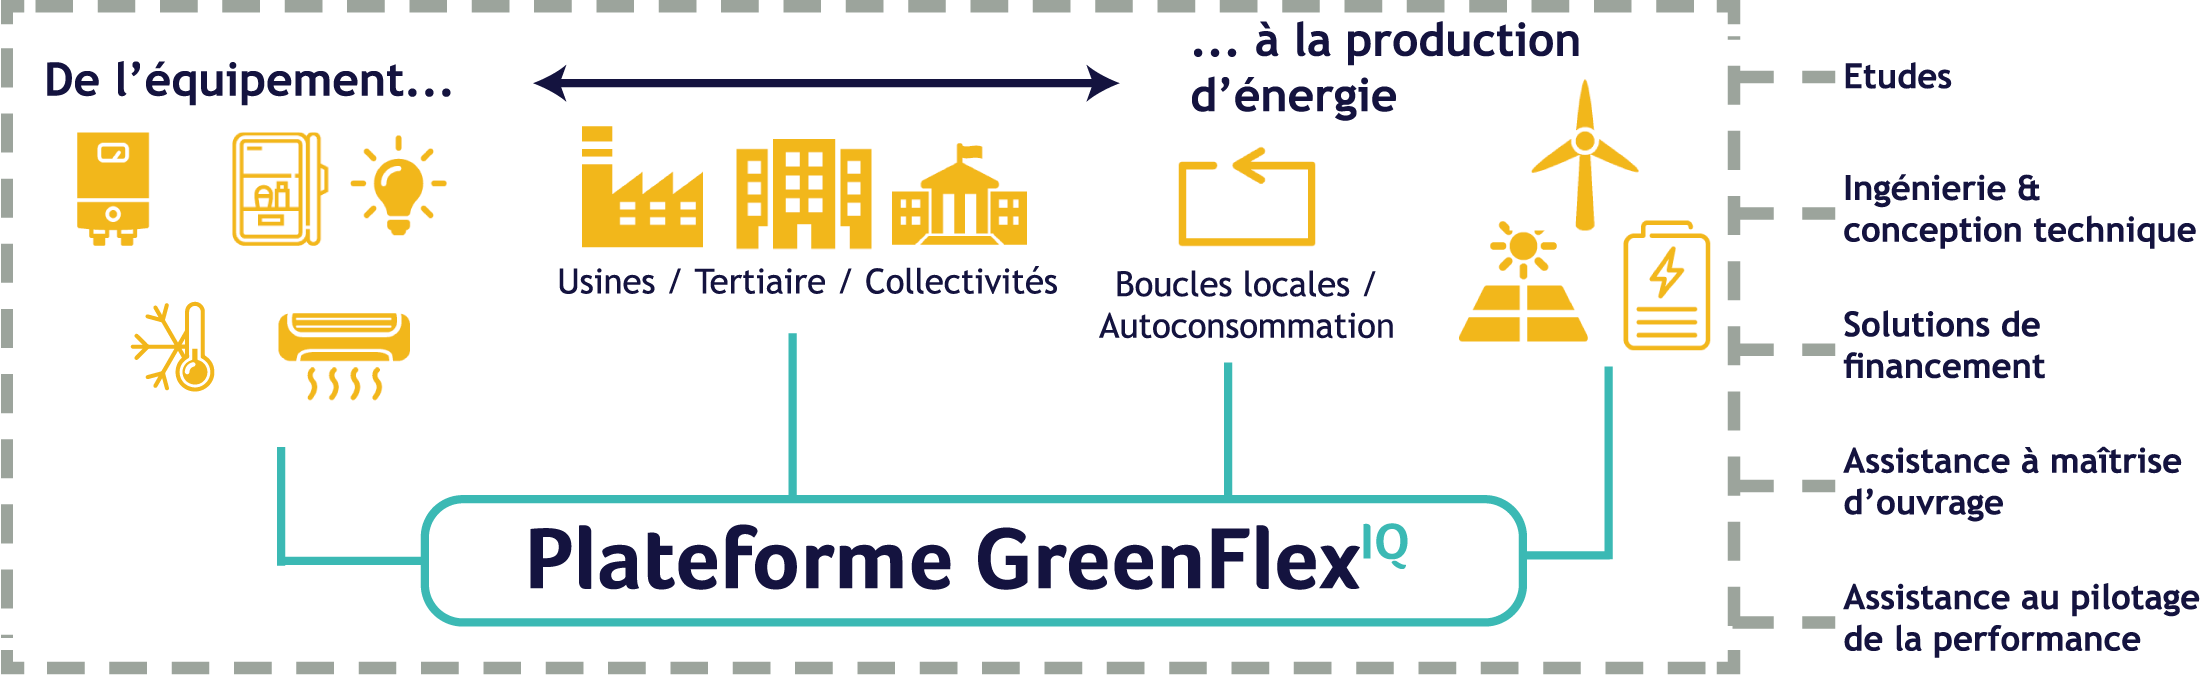 plateforme-greenflex-iq